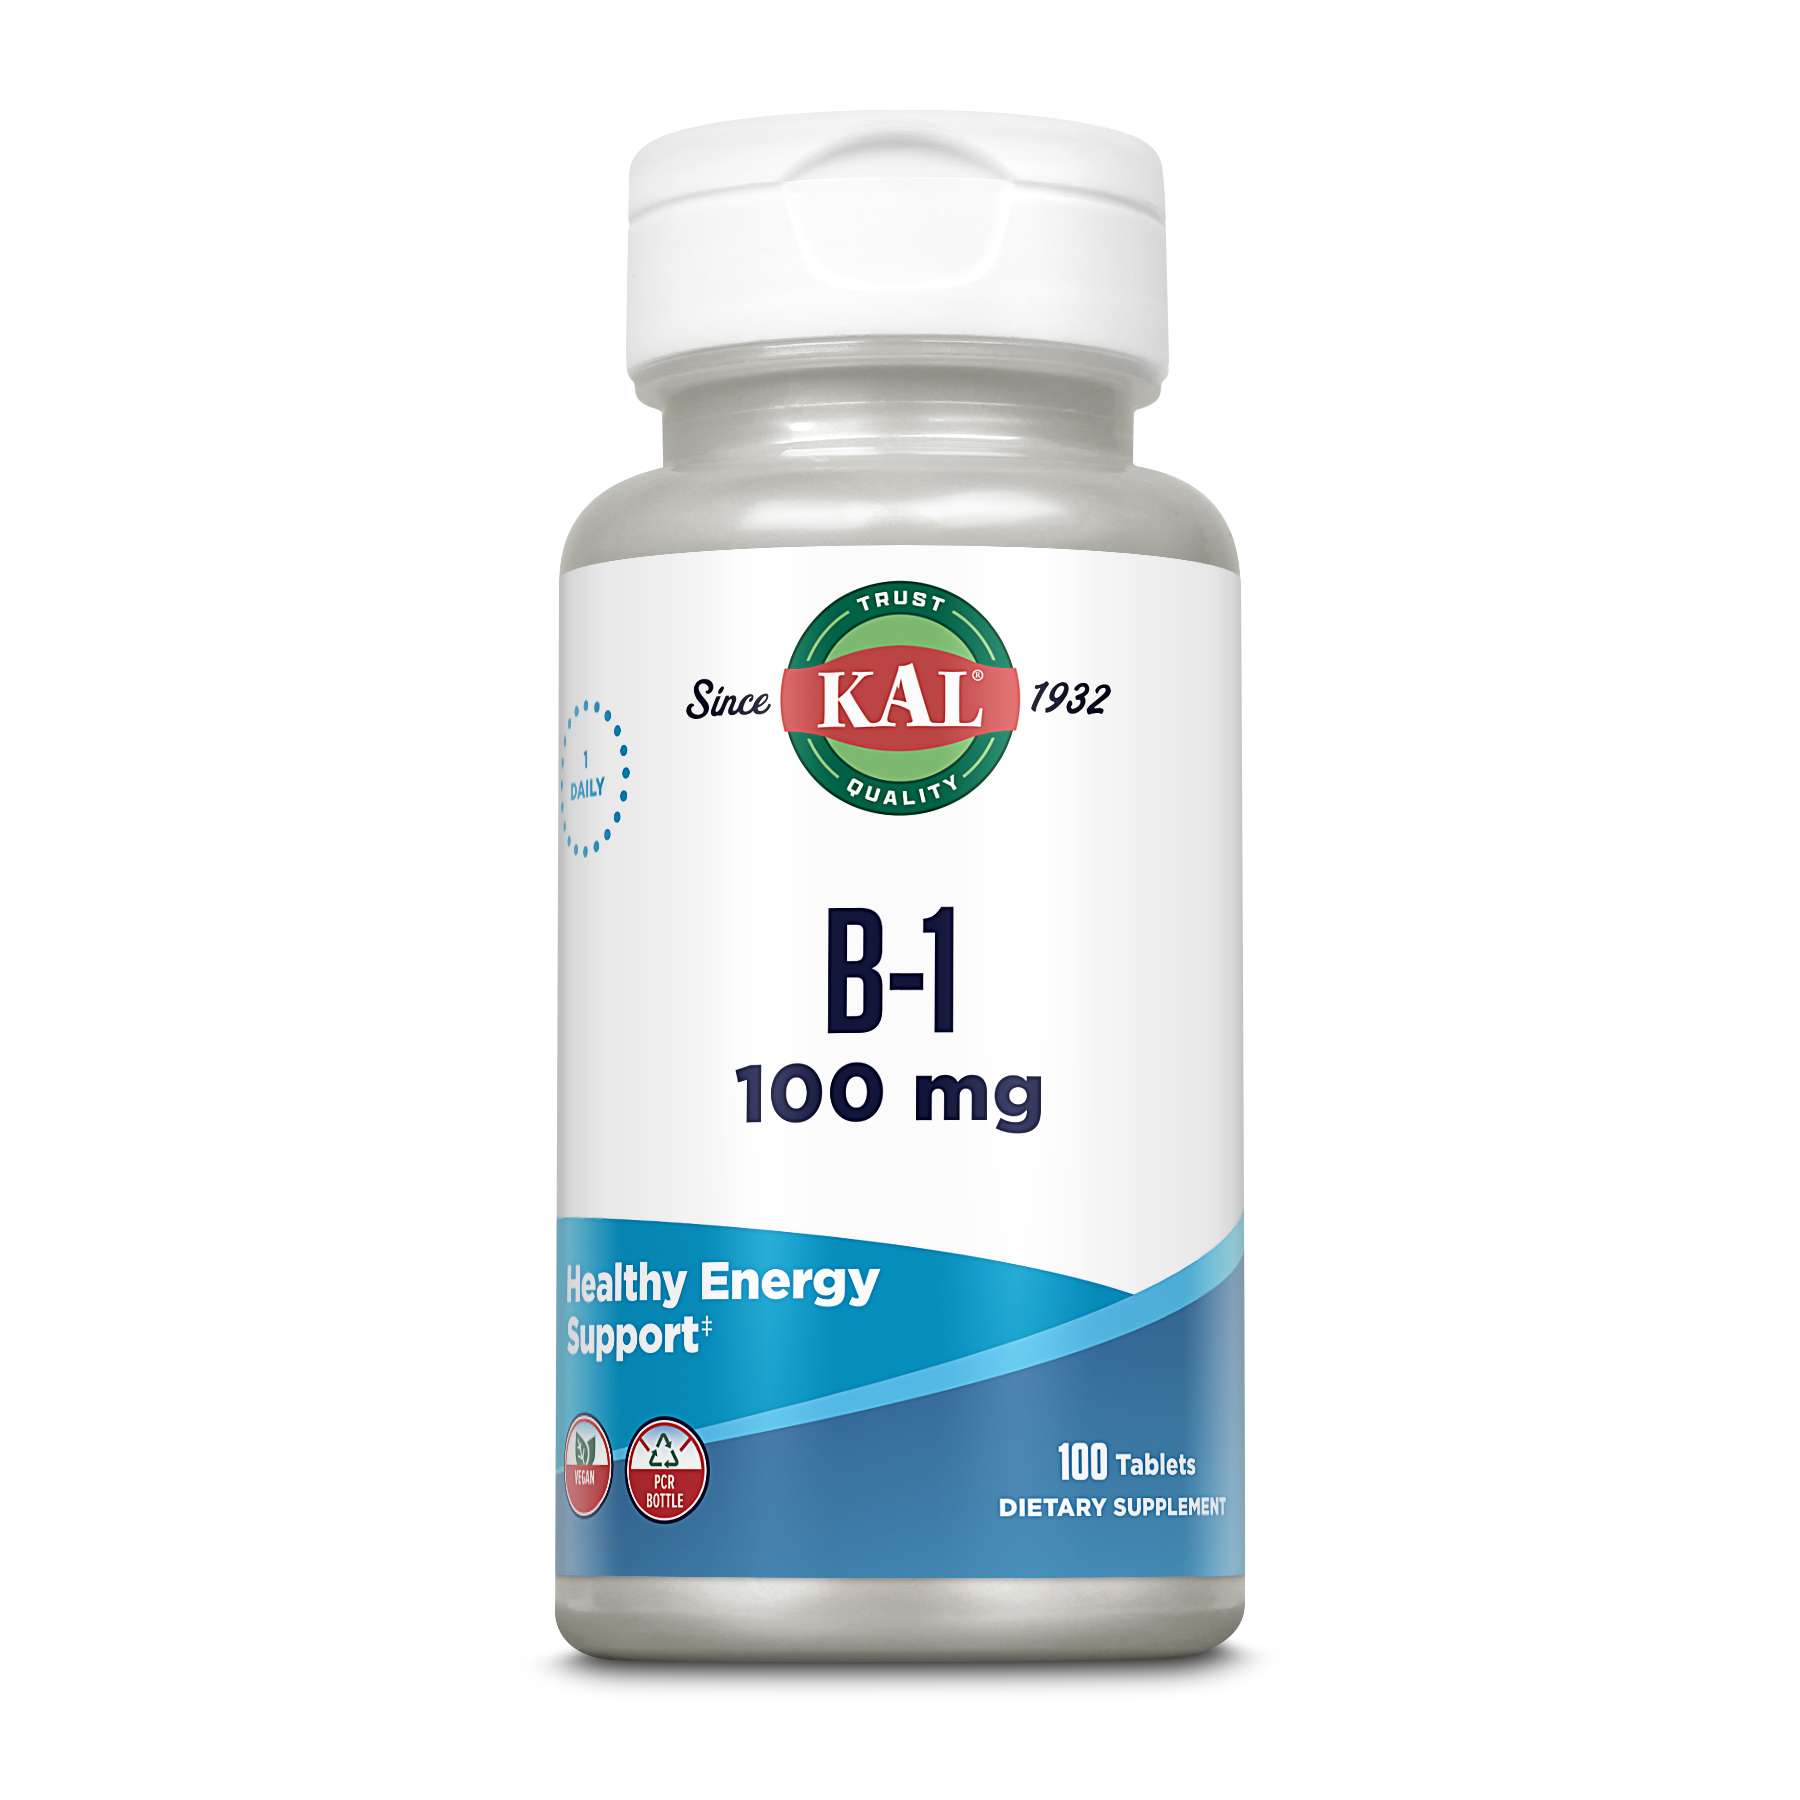 Kal - B1 100